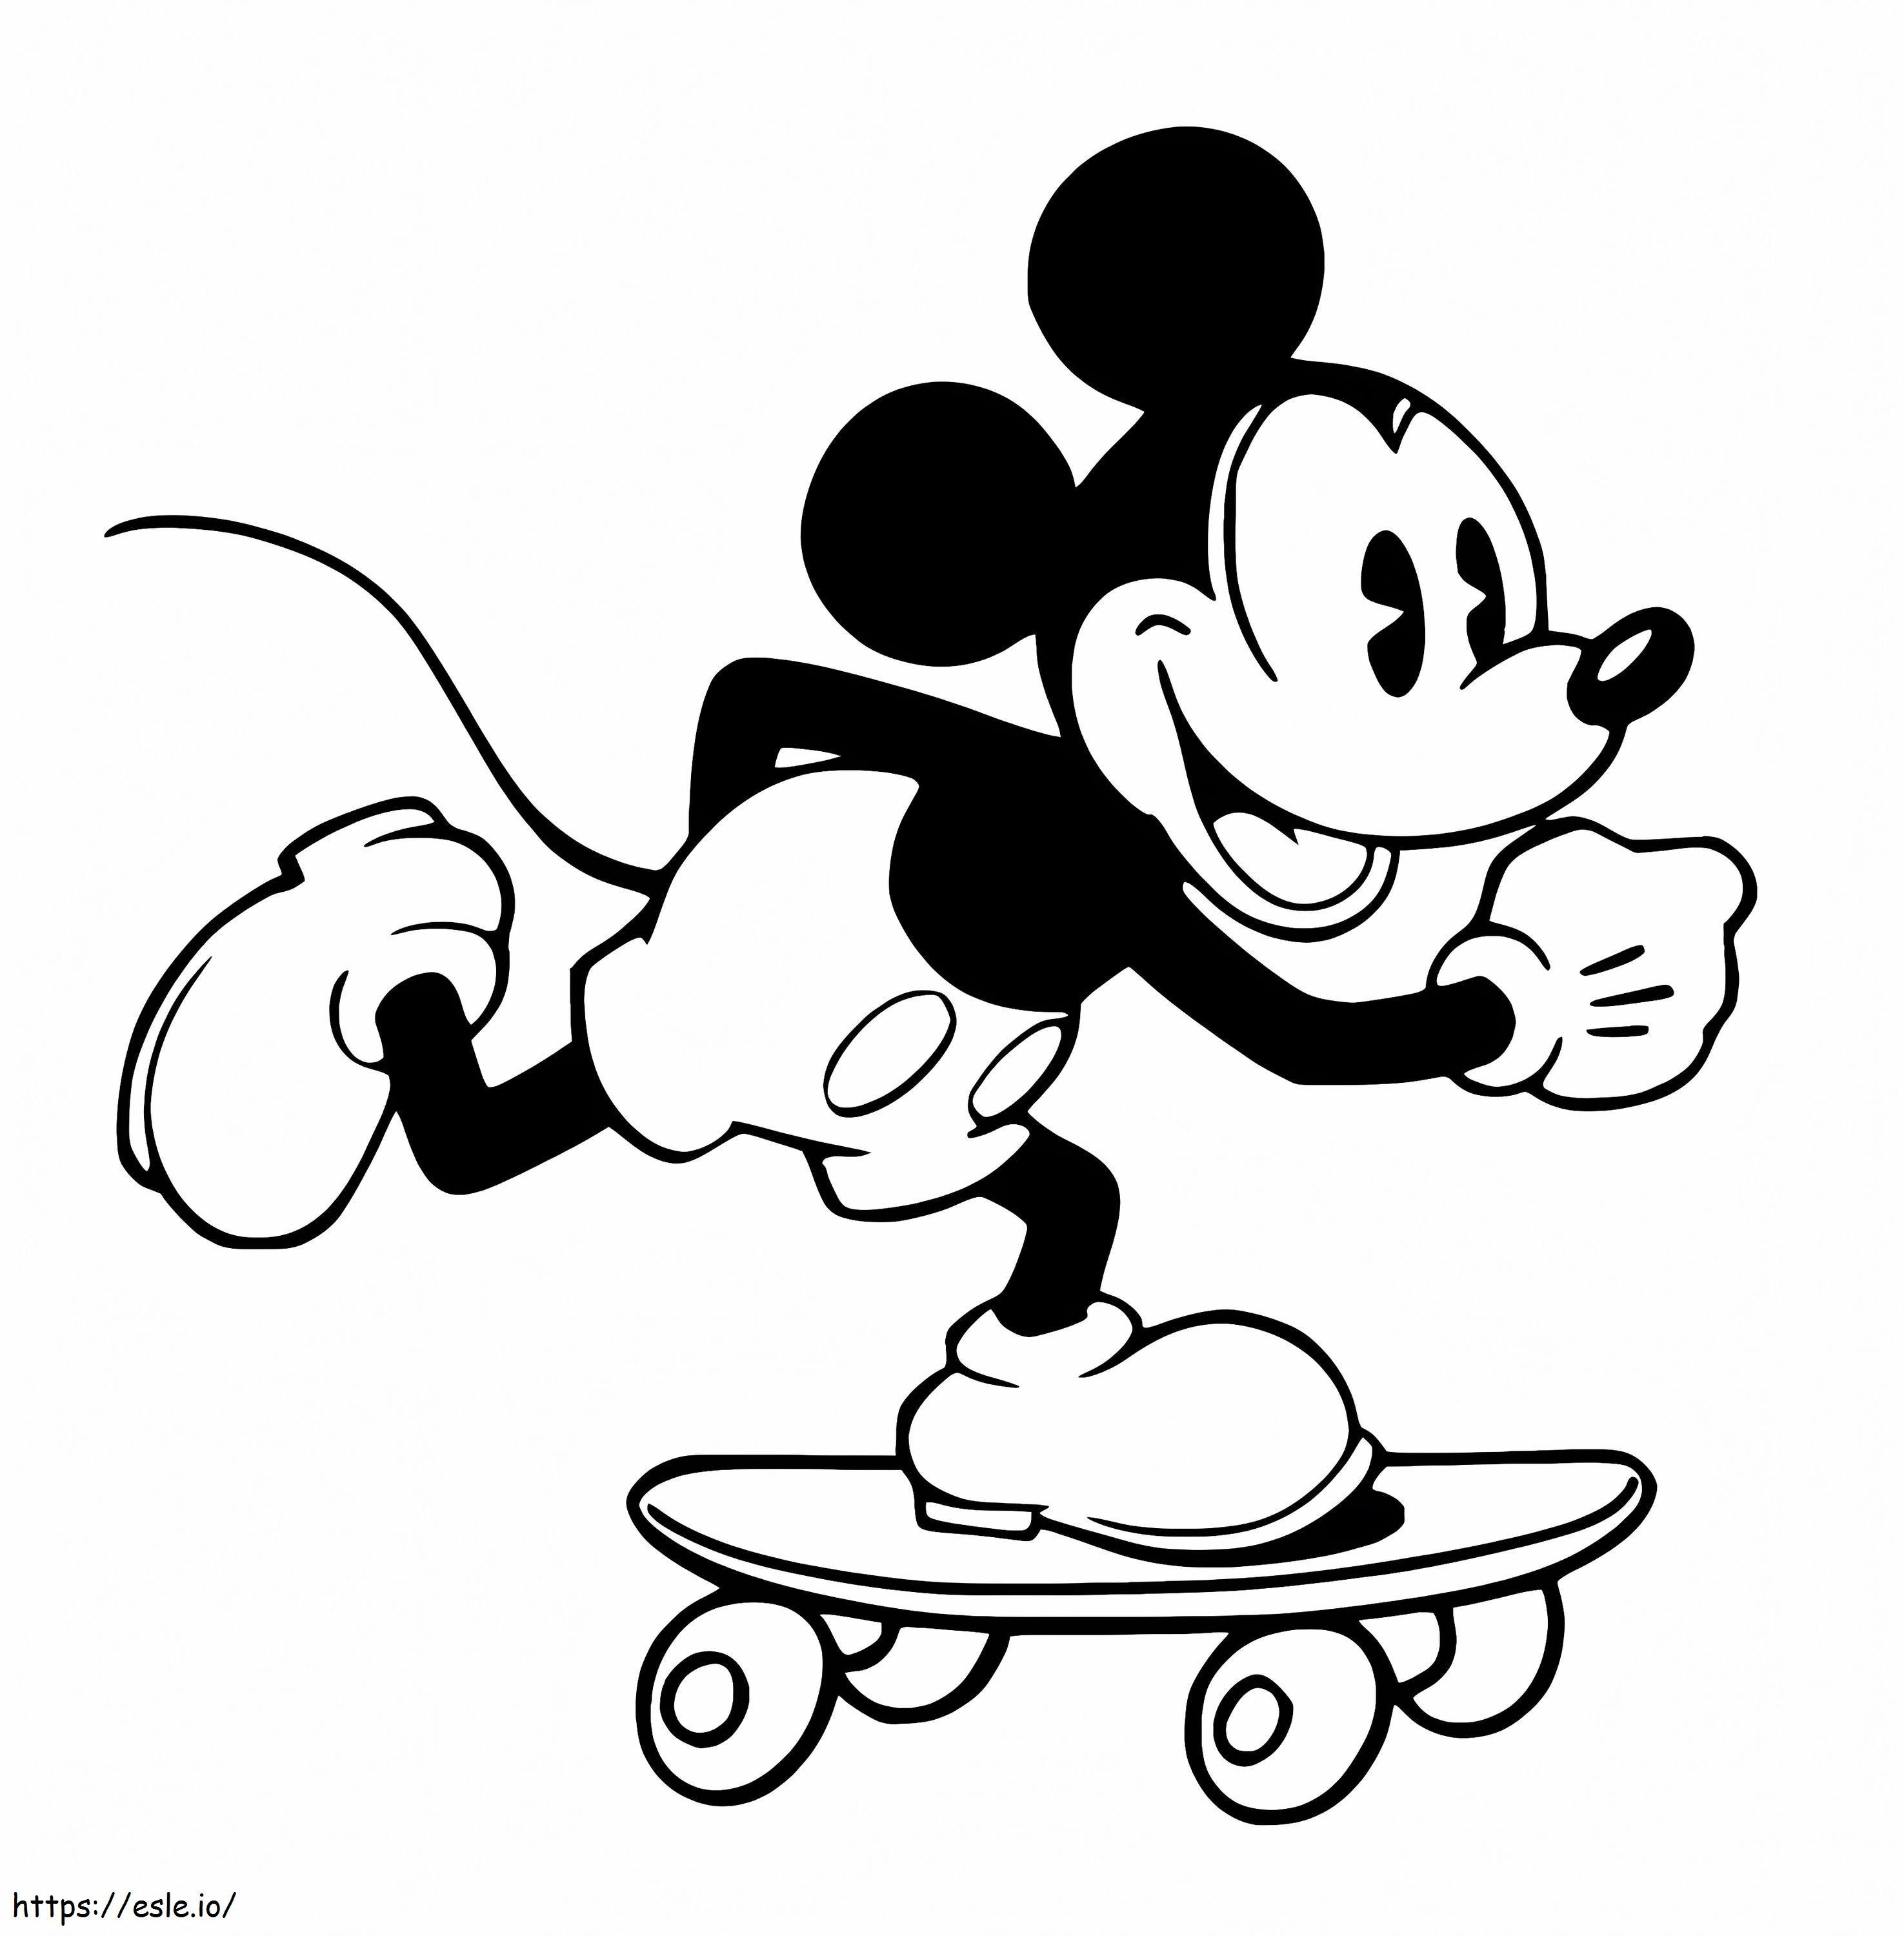 Mickey Mouse spielt Skateboard ausmalbilder